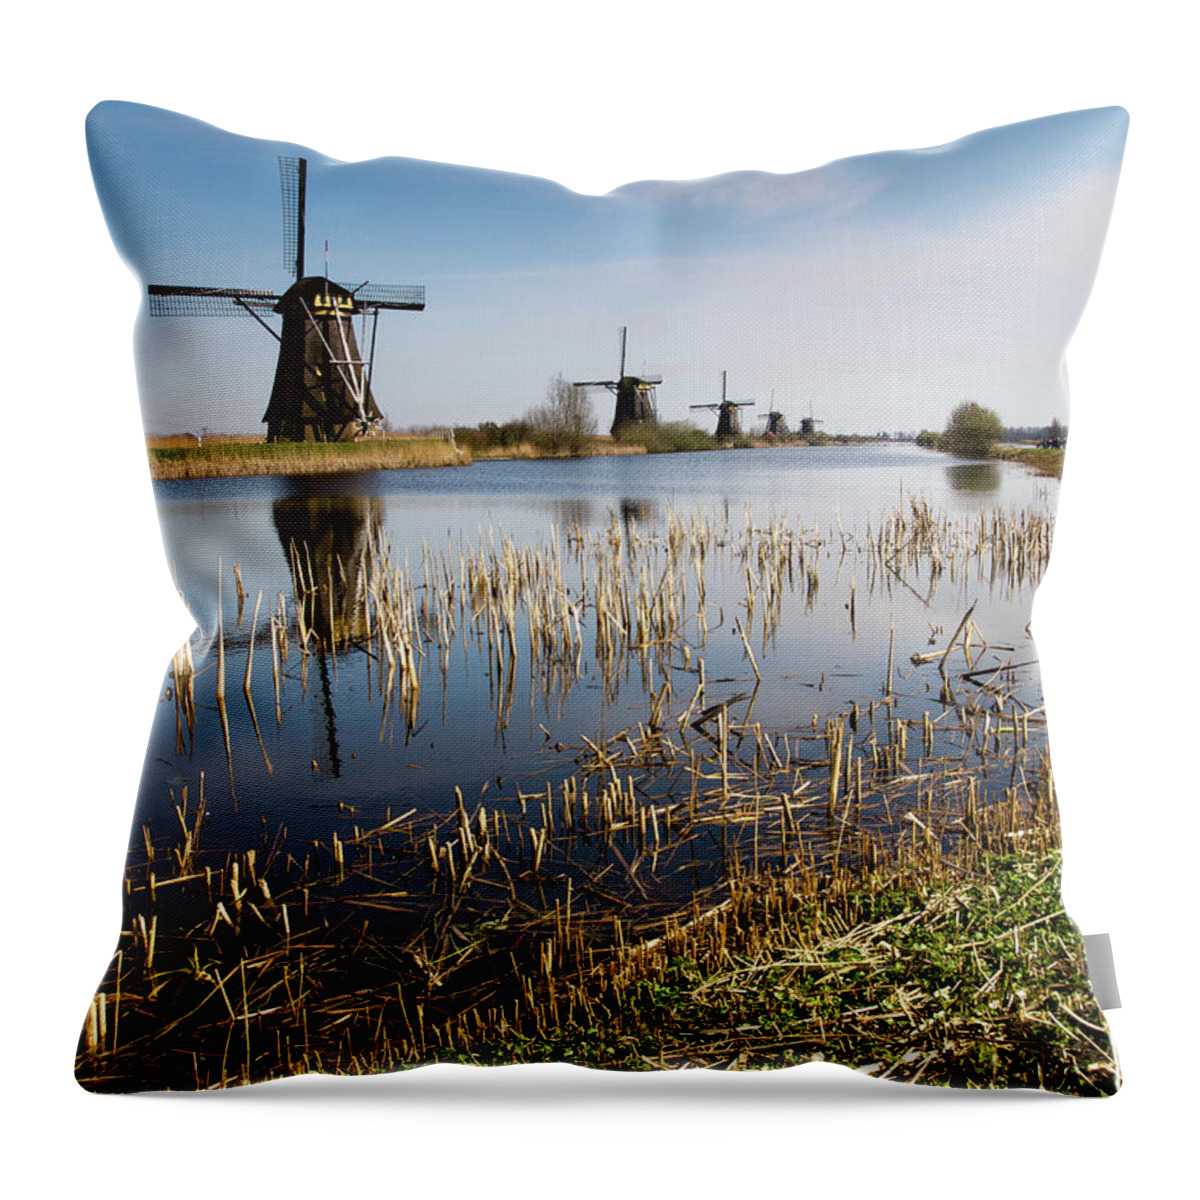 Environmental Conservation Throw Pillow featuring the photograph Kinderdijk Mills by Peterj©